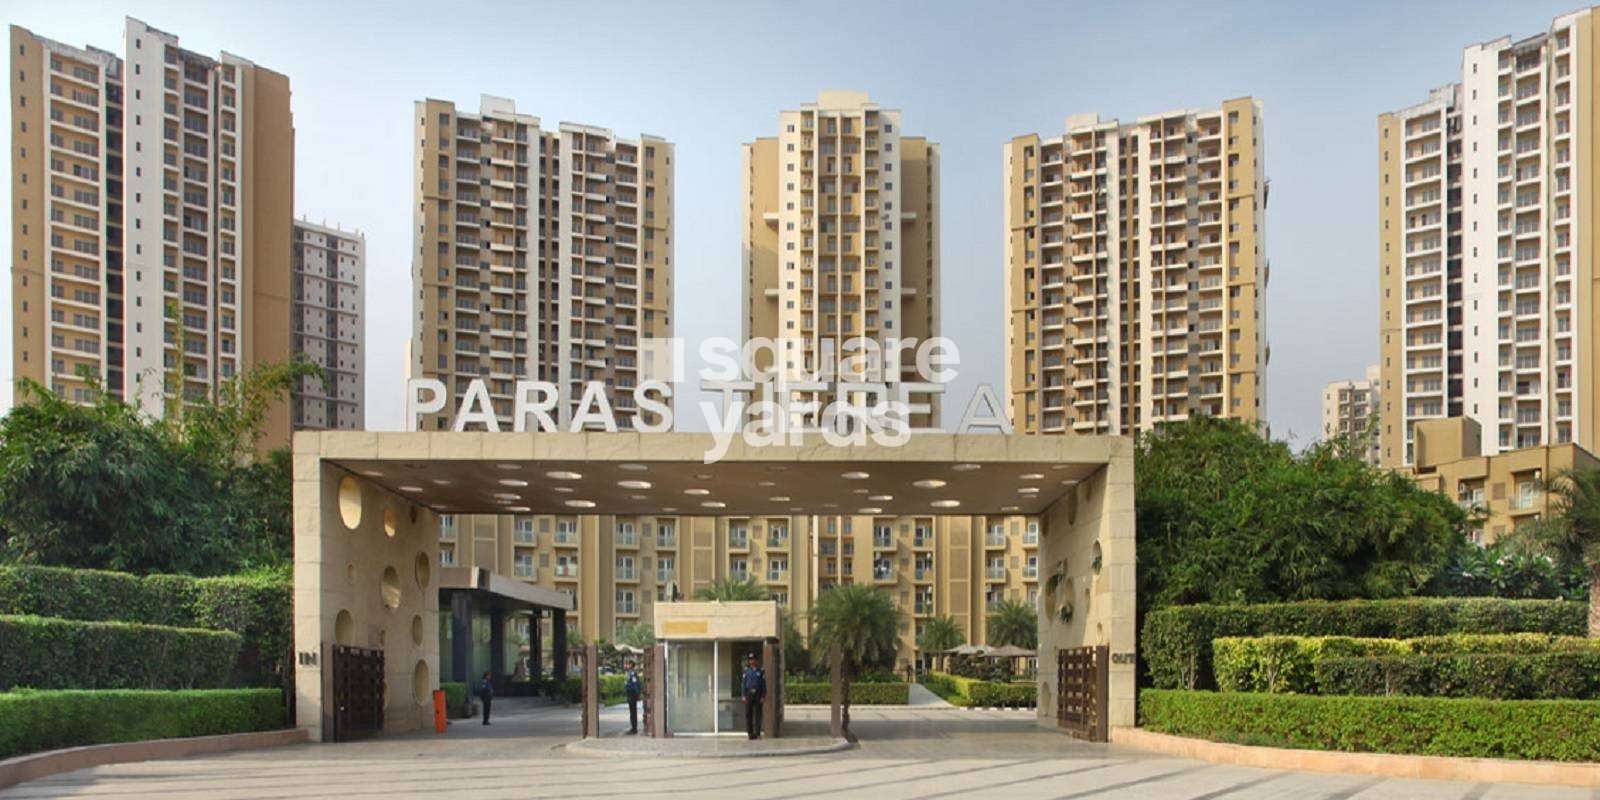 Paras Tierea Studio Apartments Cover Image